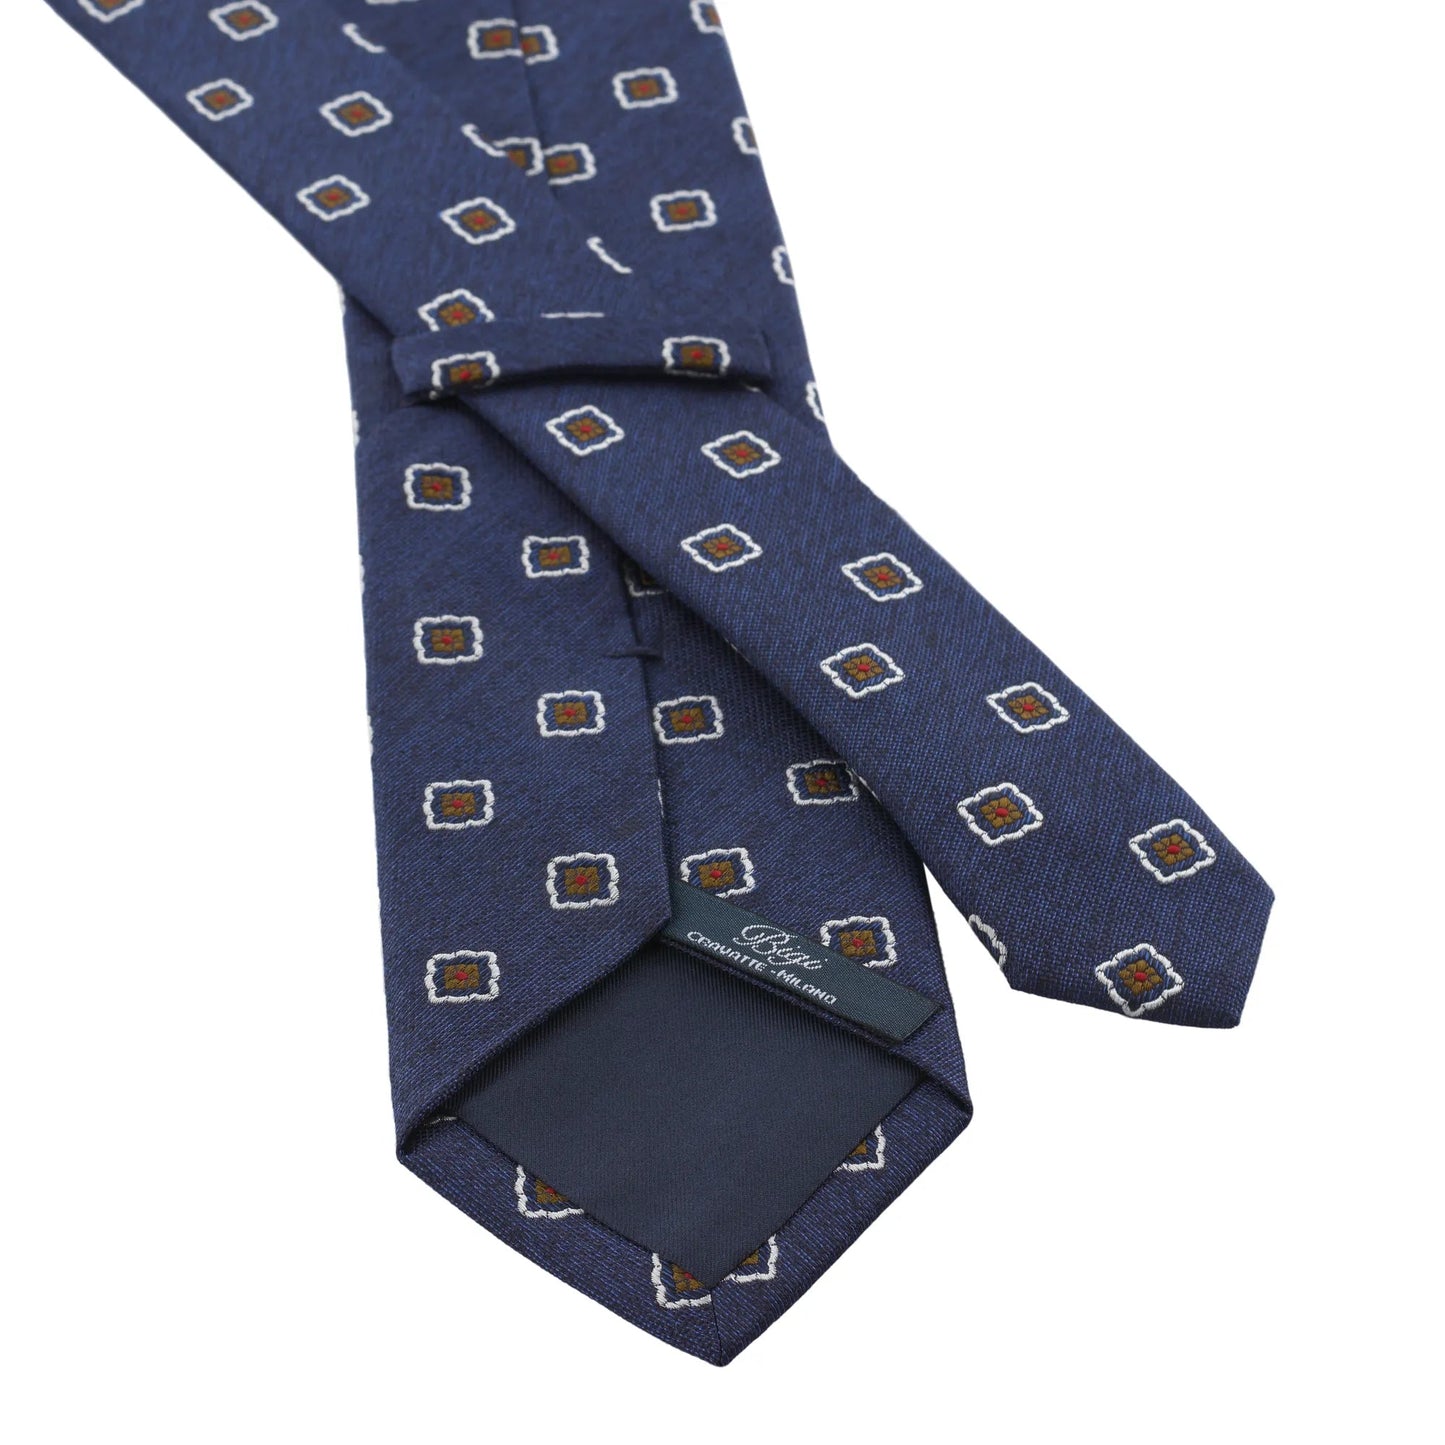 Bigi Jacquard Lined Silk Tie with Floral Design - SARTALE